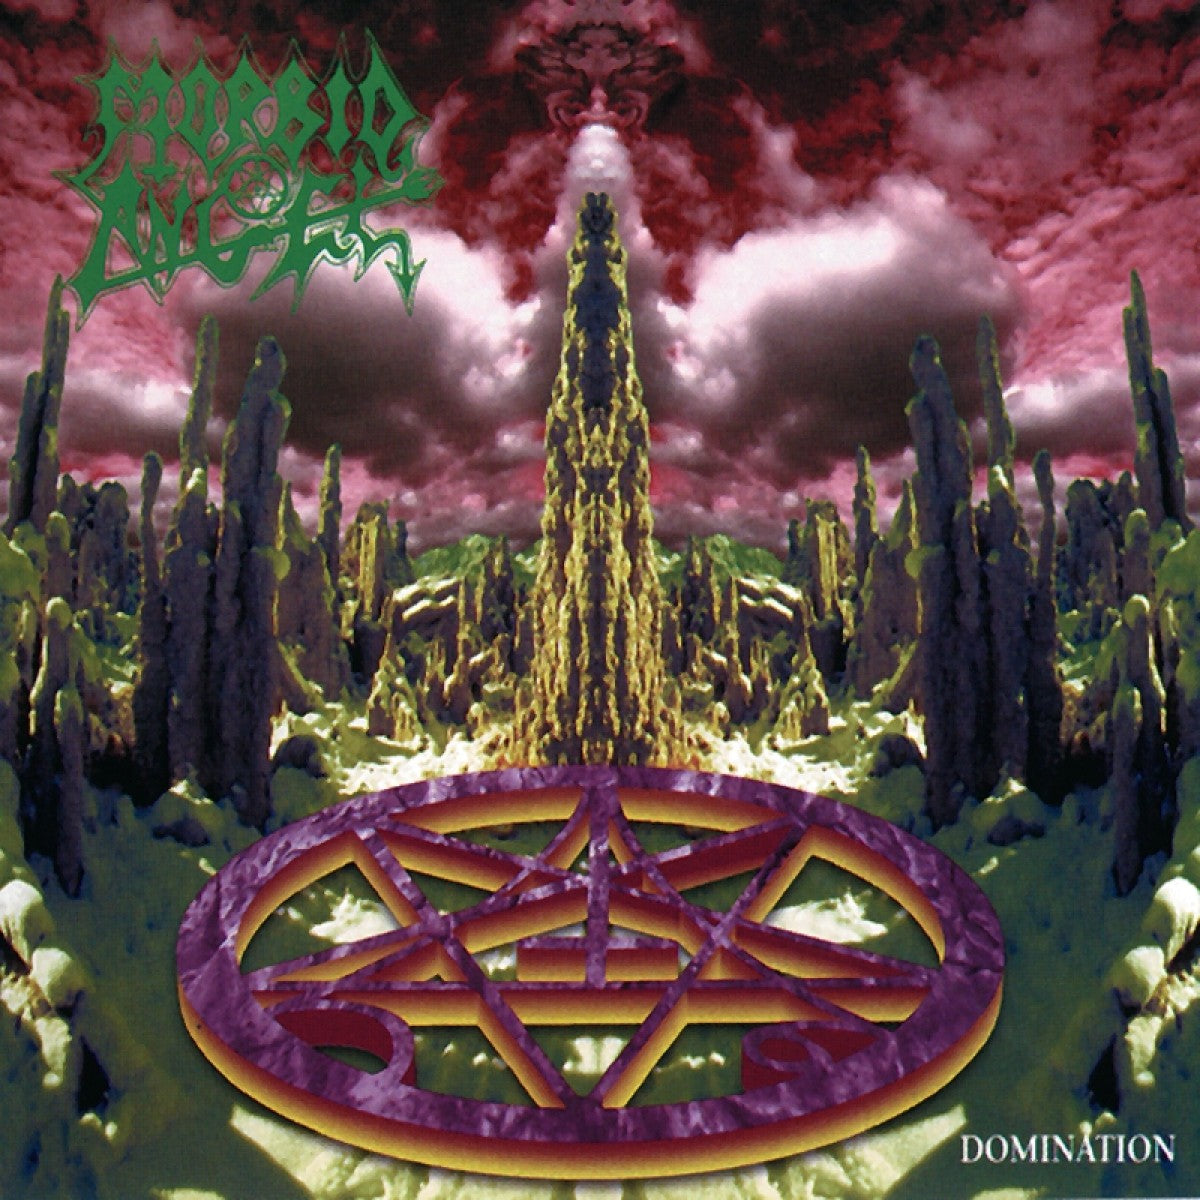 Morbid Angel "Domination" FDR Digipak CD